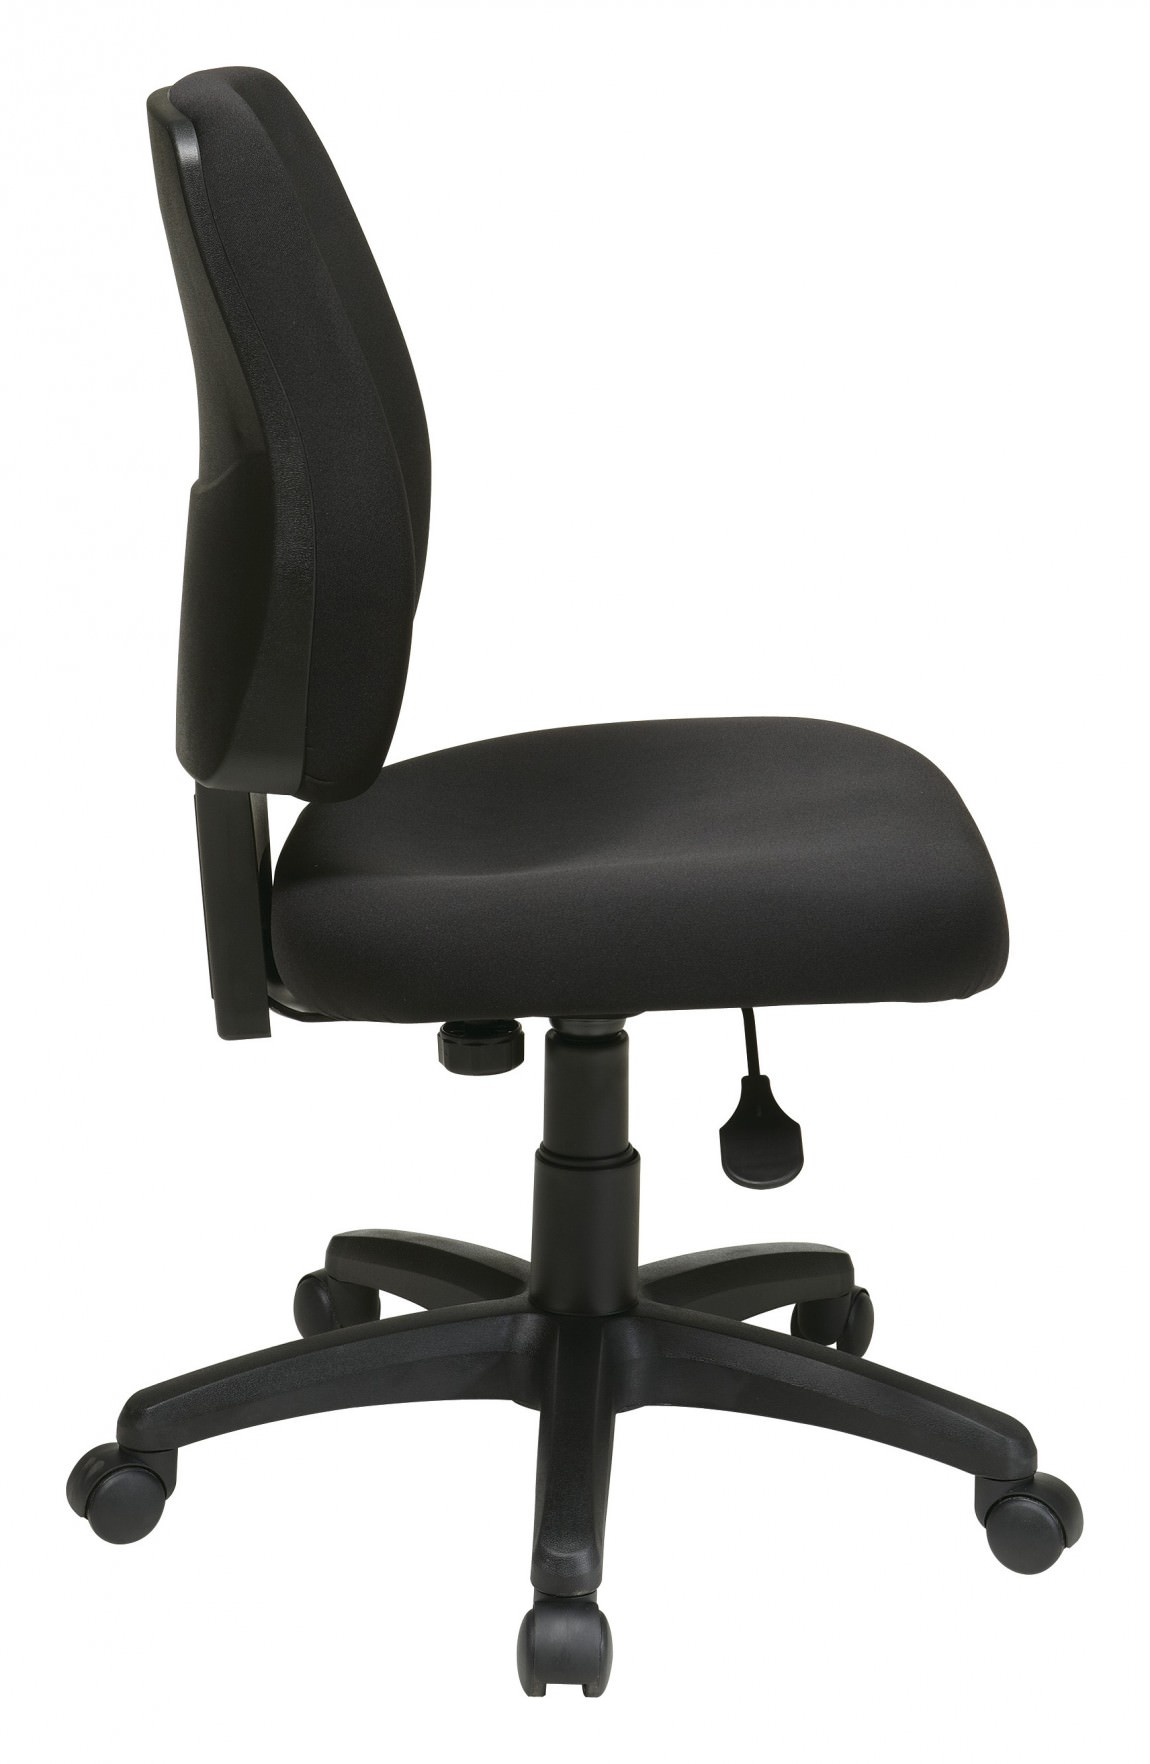 https://madisonliquidators.com/images/p/1150/25982-armless-office-chair-2.jpg